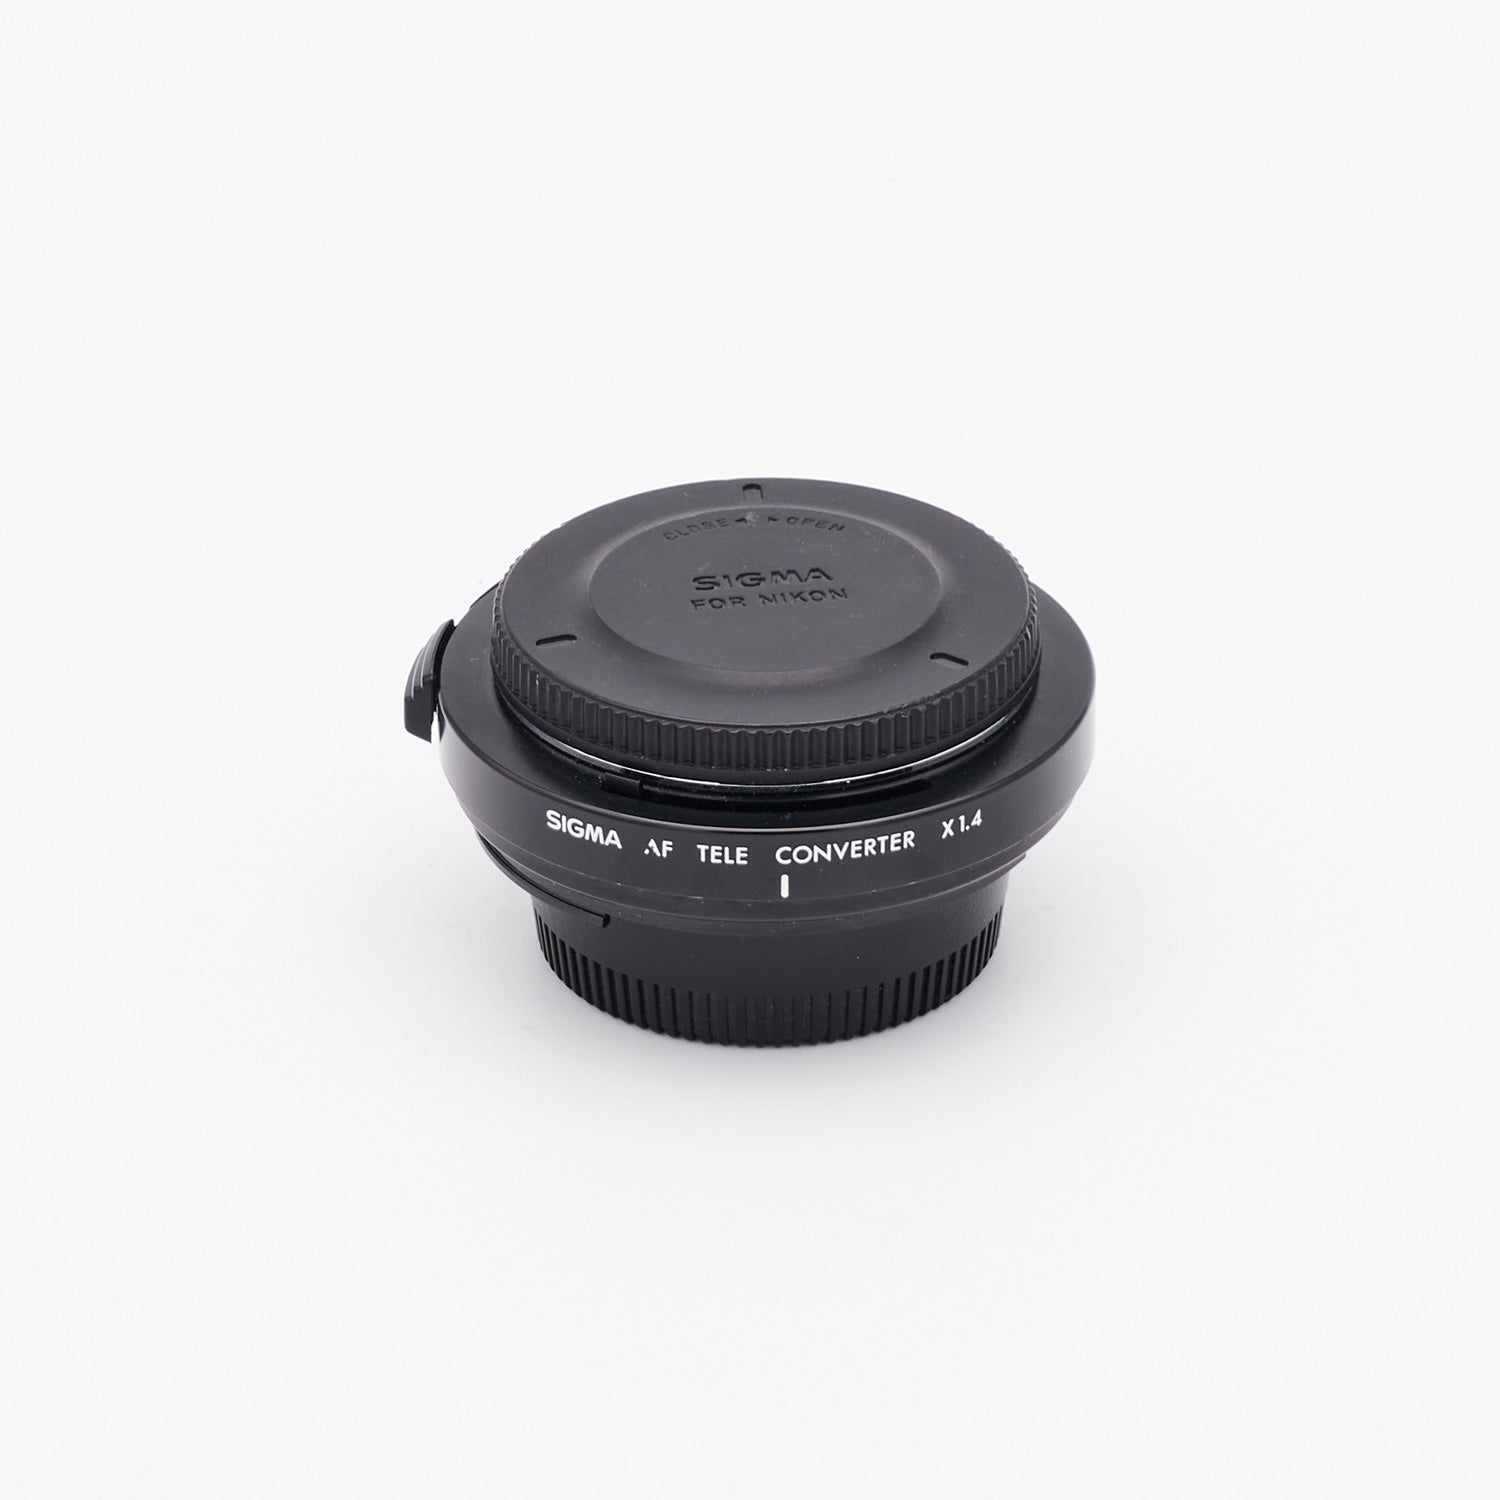 Sigma AF Tele Converter X1.4 (Nikon F) (int. S/N 0164)